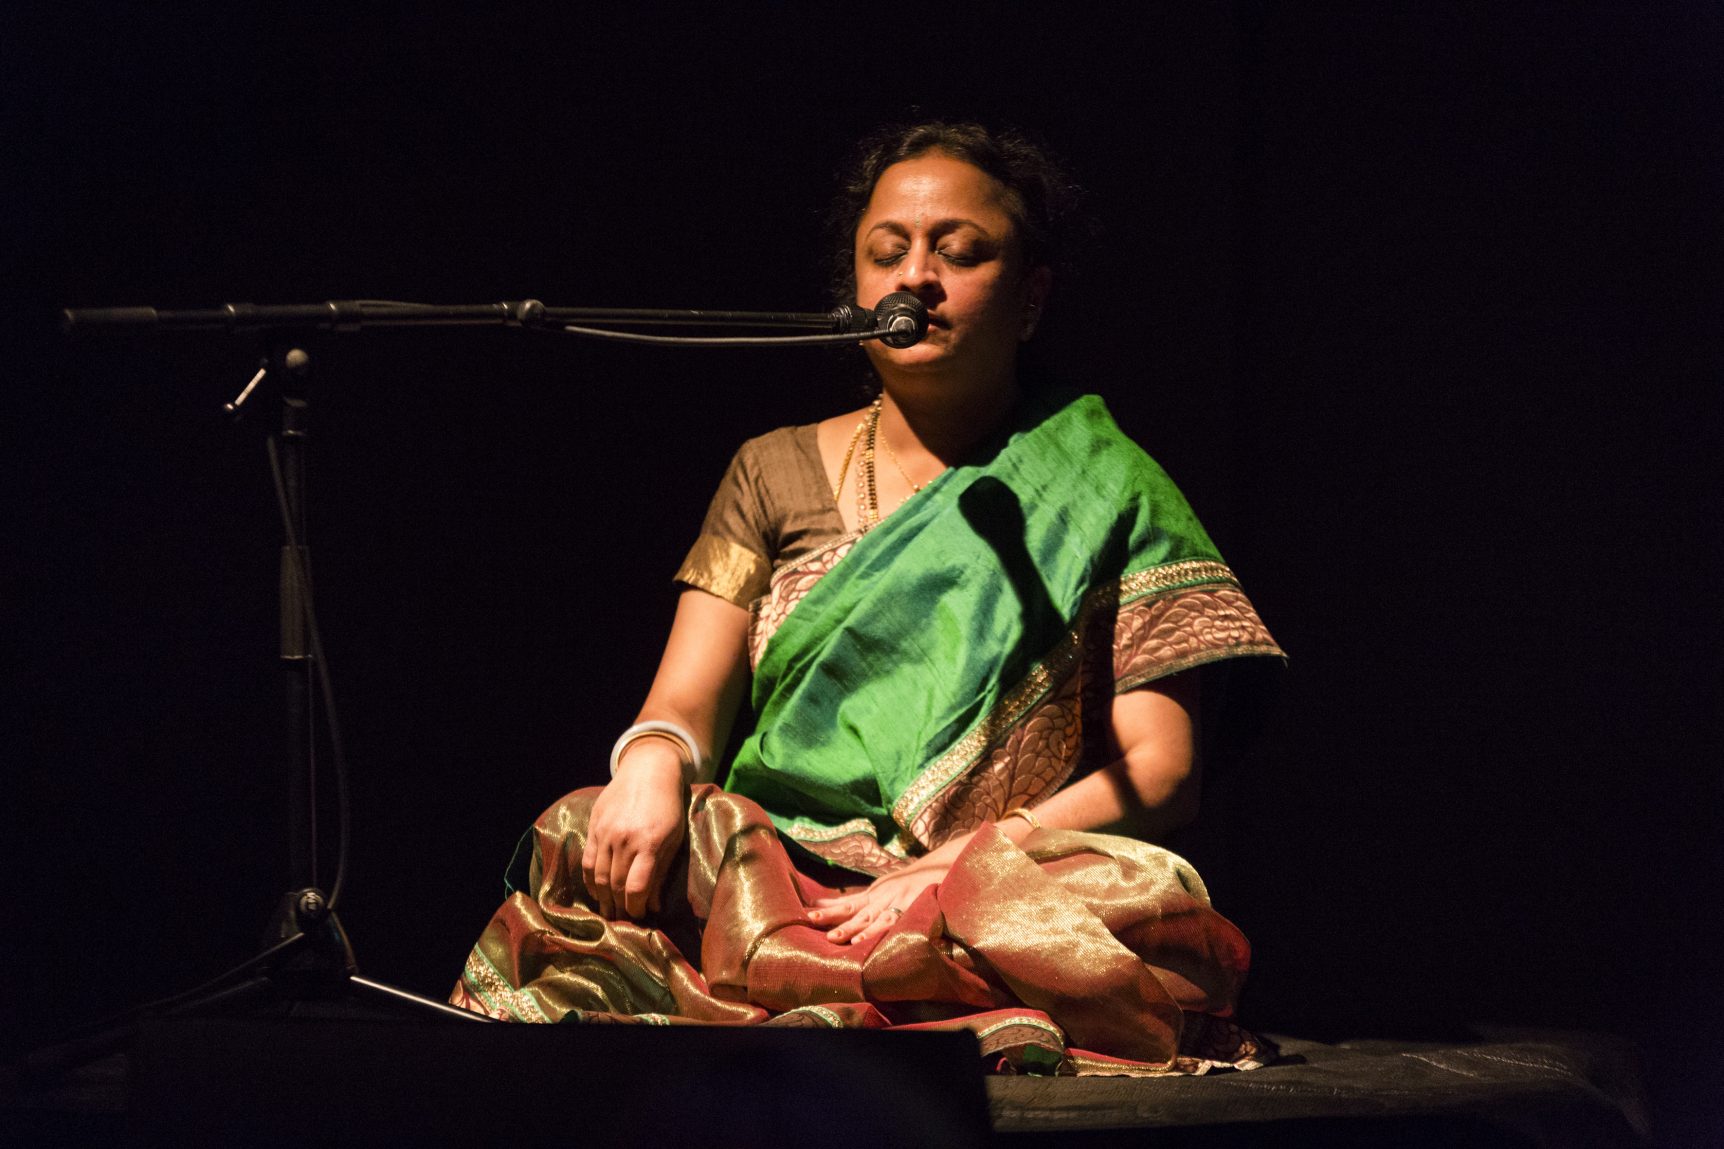 Supriya sat cross-legged, singing into microphone